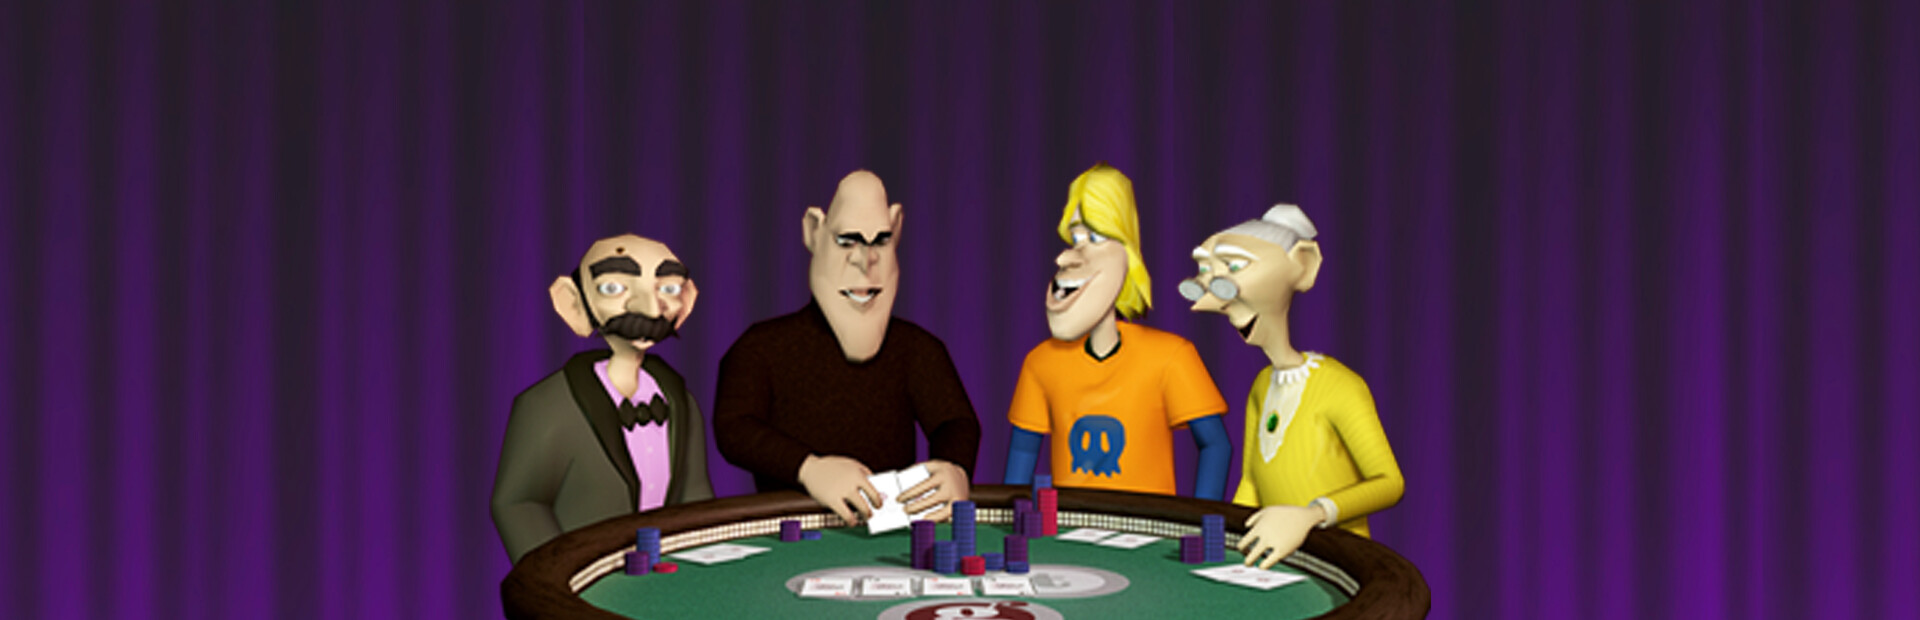 Telltale Texas Hold ‘Em cover image